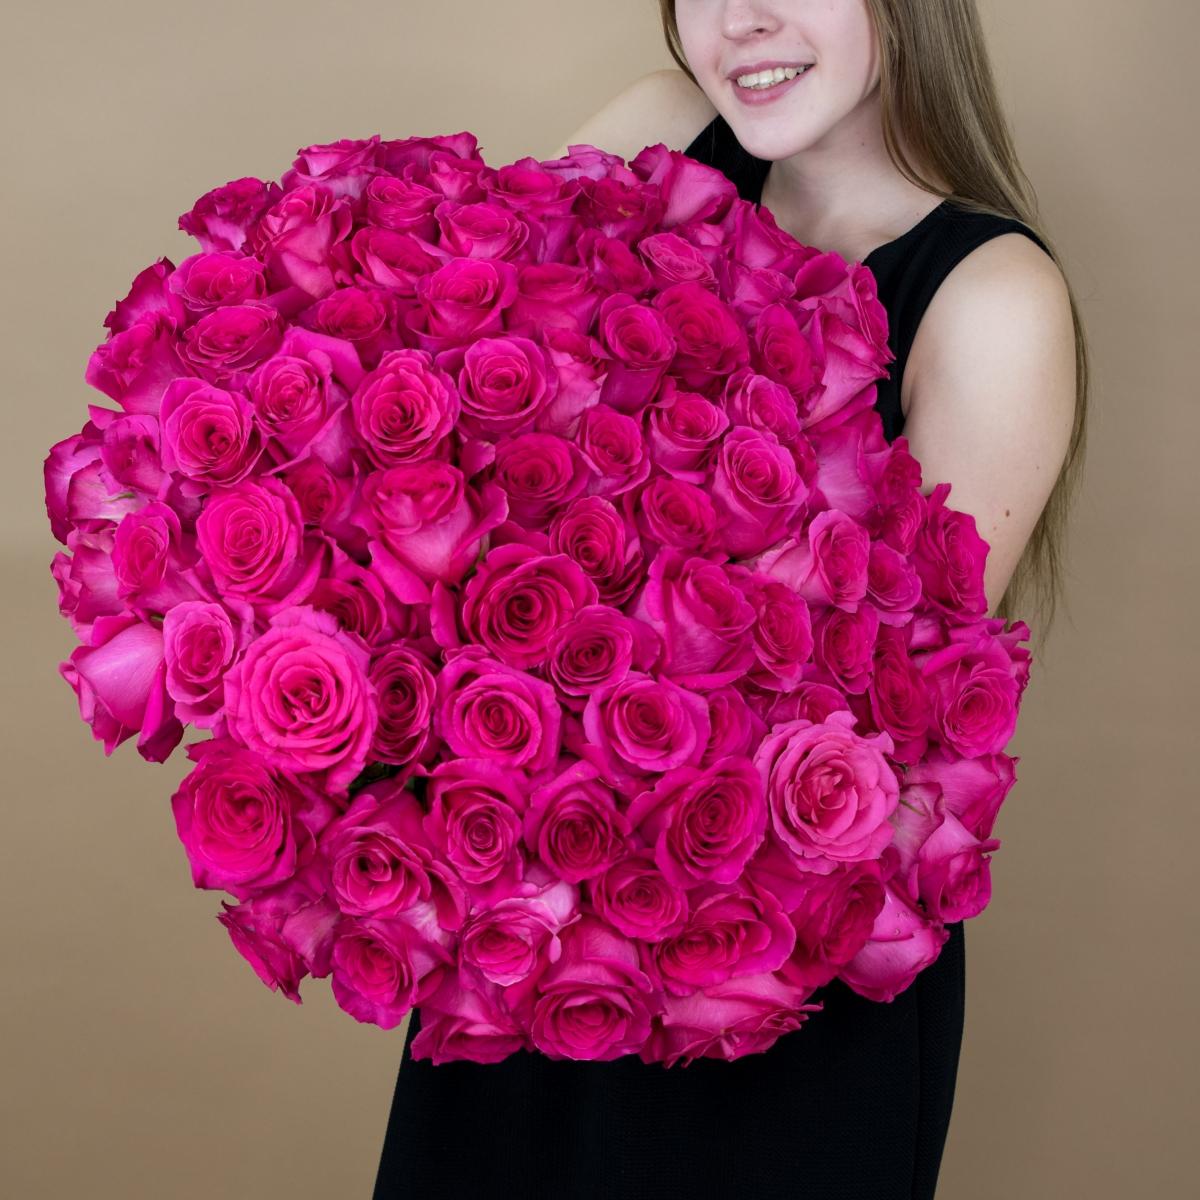 Букет из розовых роз 75 шт. (40 см) артикул  14014argl